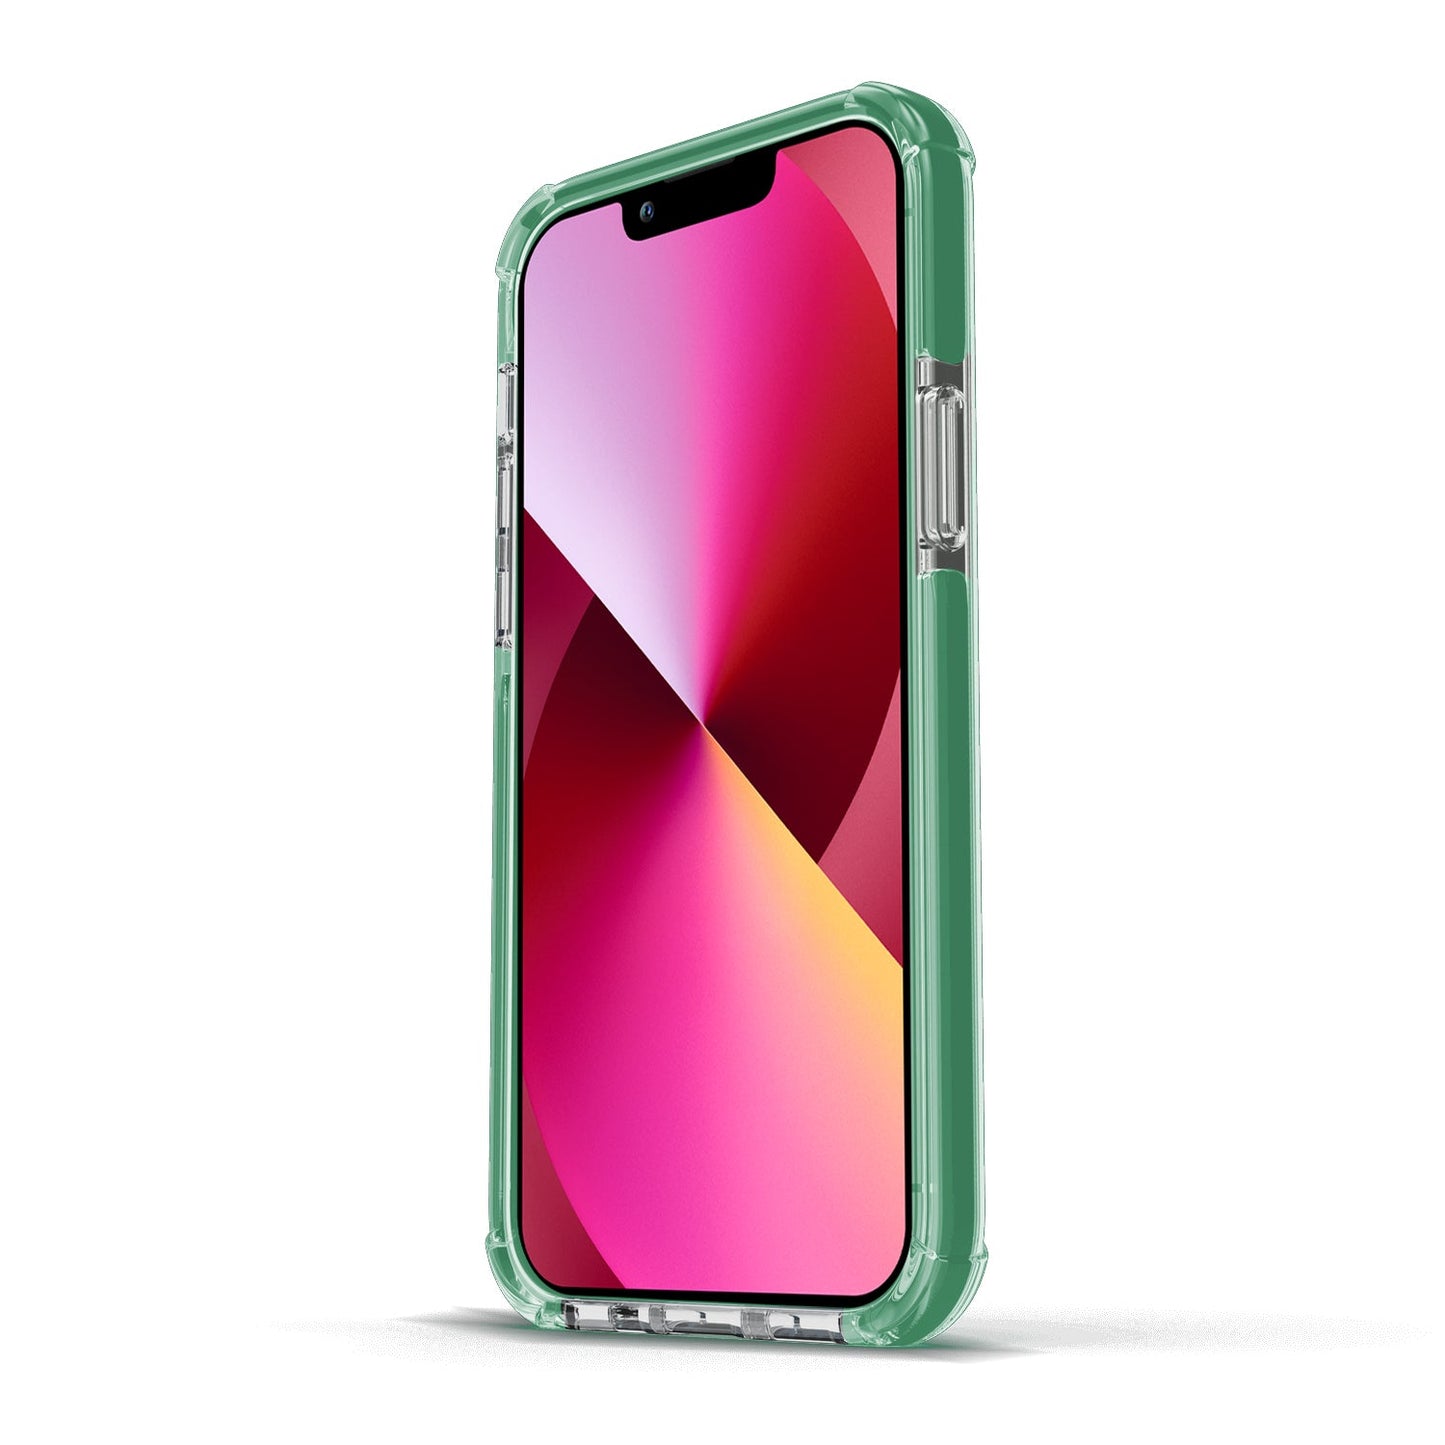 Gripp Monde Case For Apple Iphone 13 (6.1") - Green